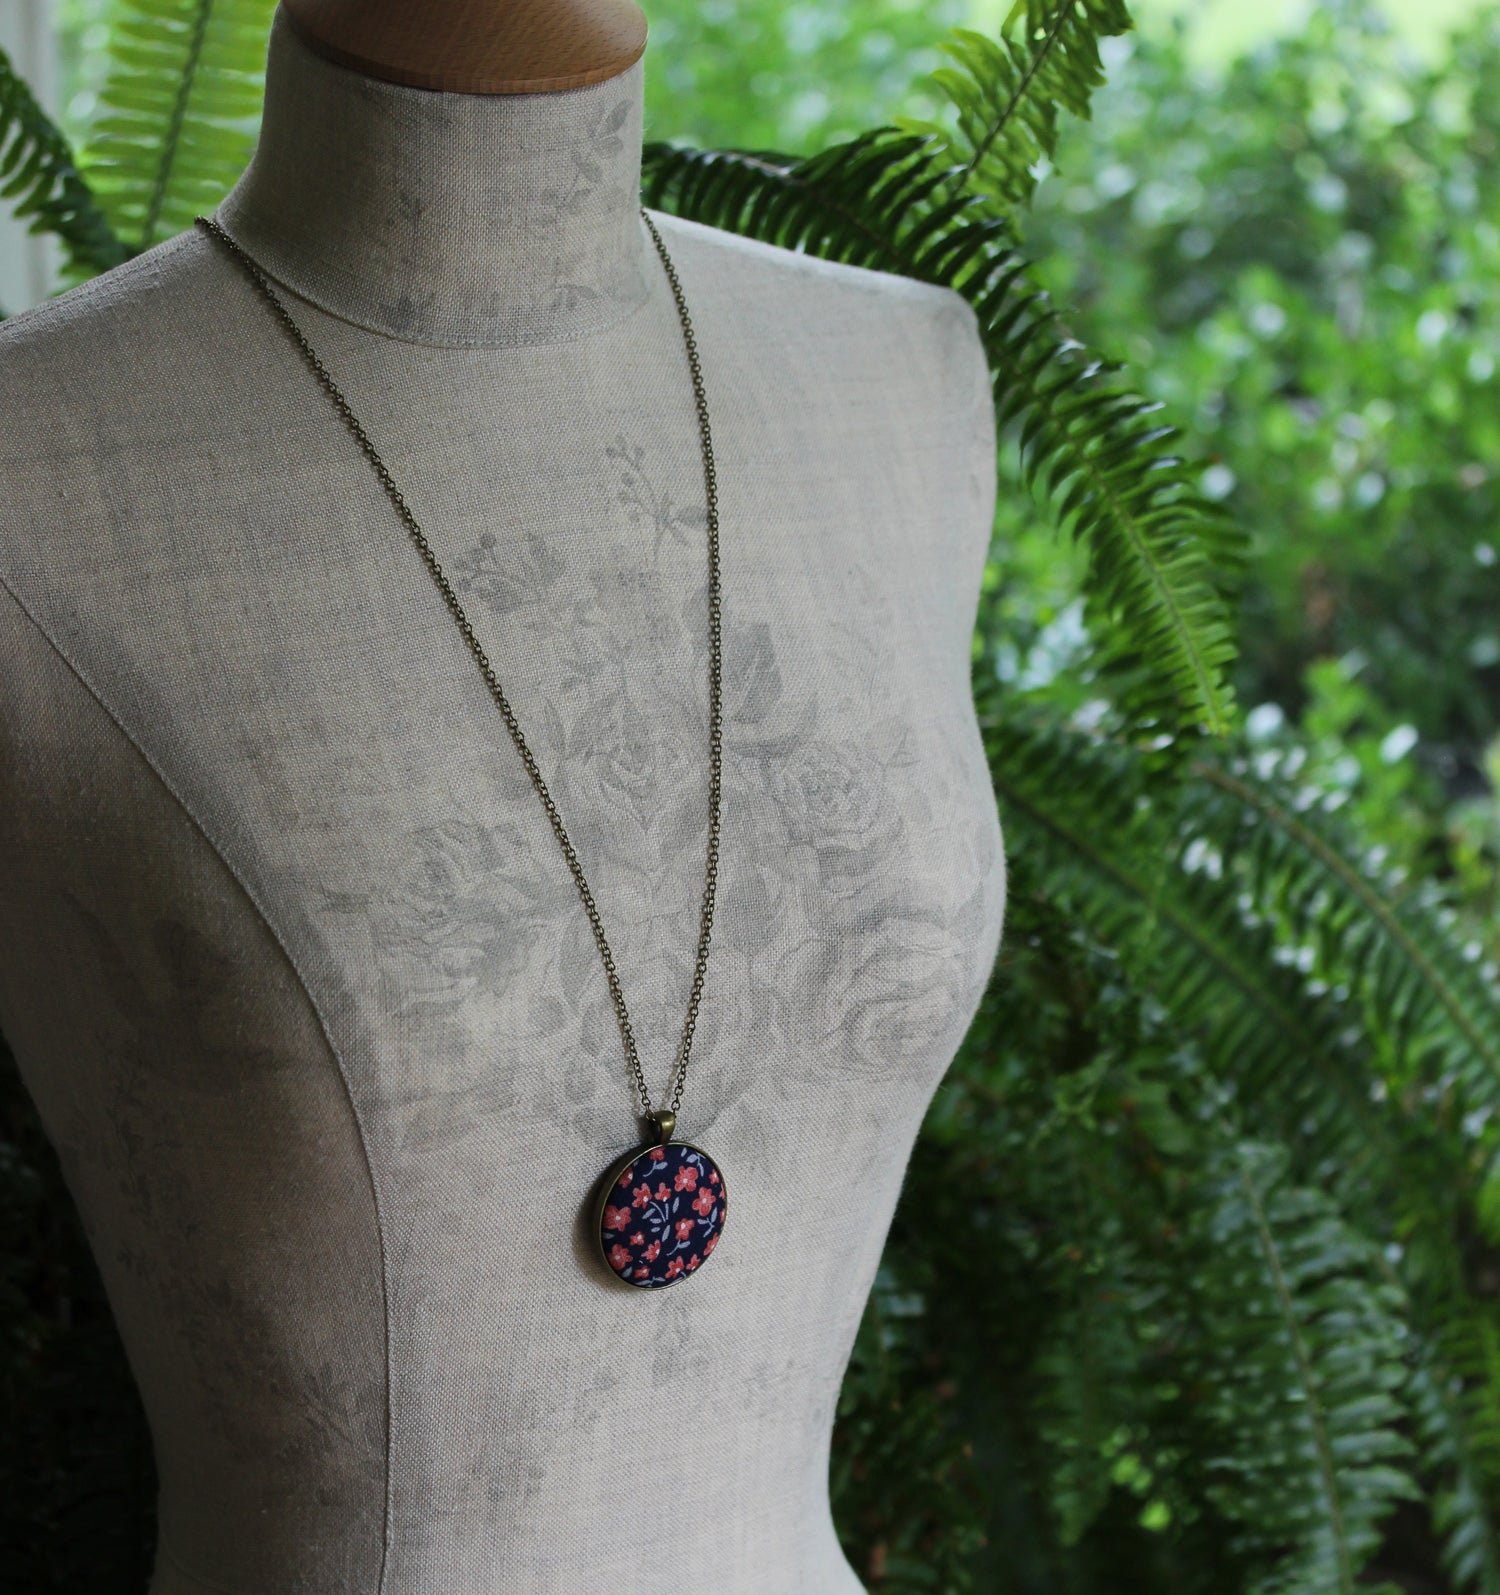 Pierce Your Heart' Bleeding Heart Necklace – AnaKatarina Design